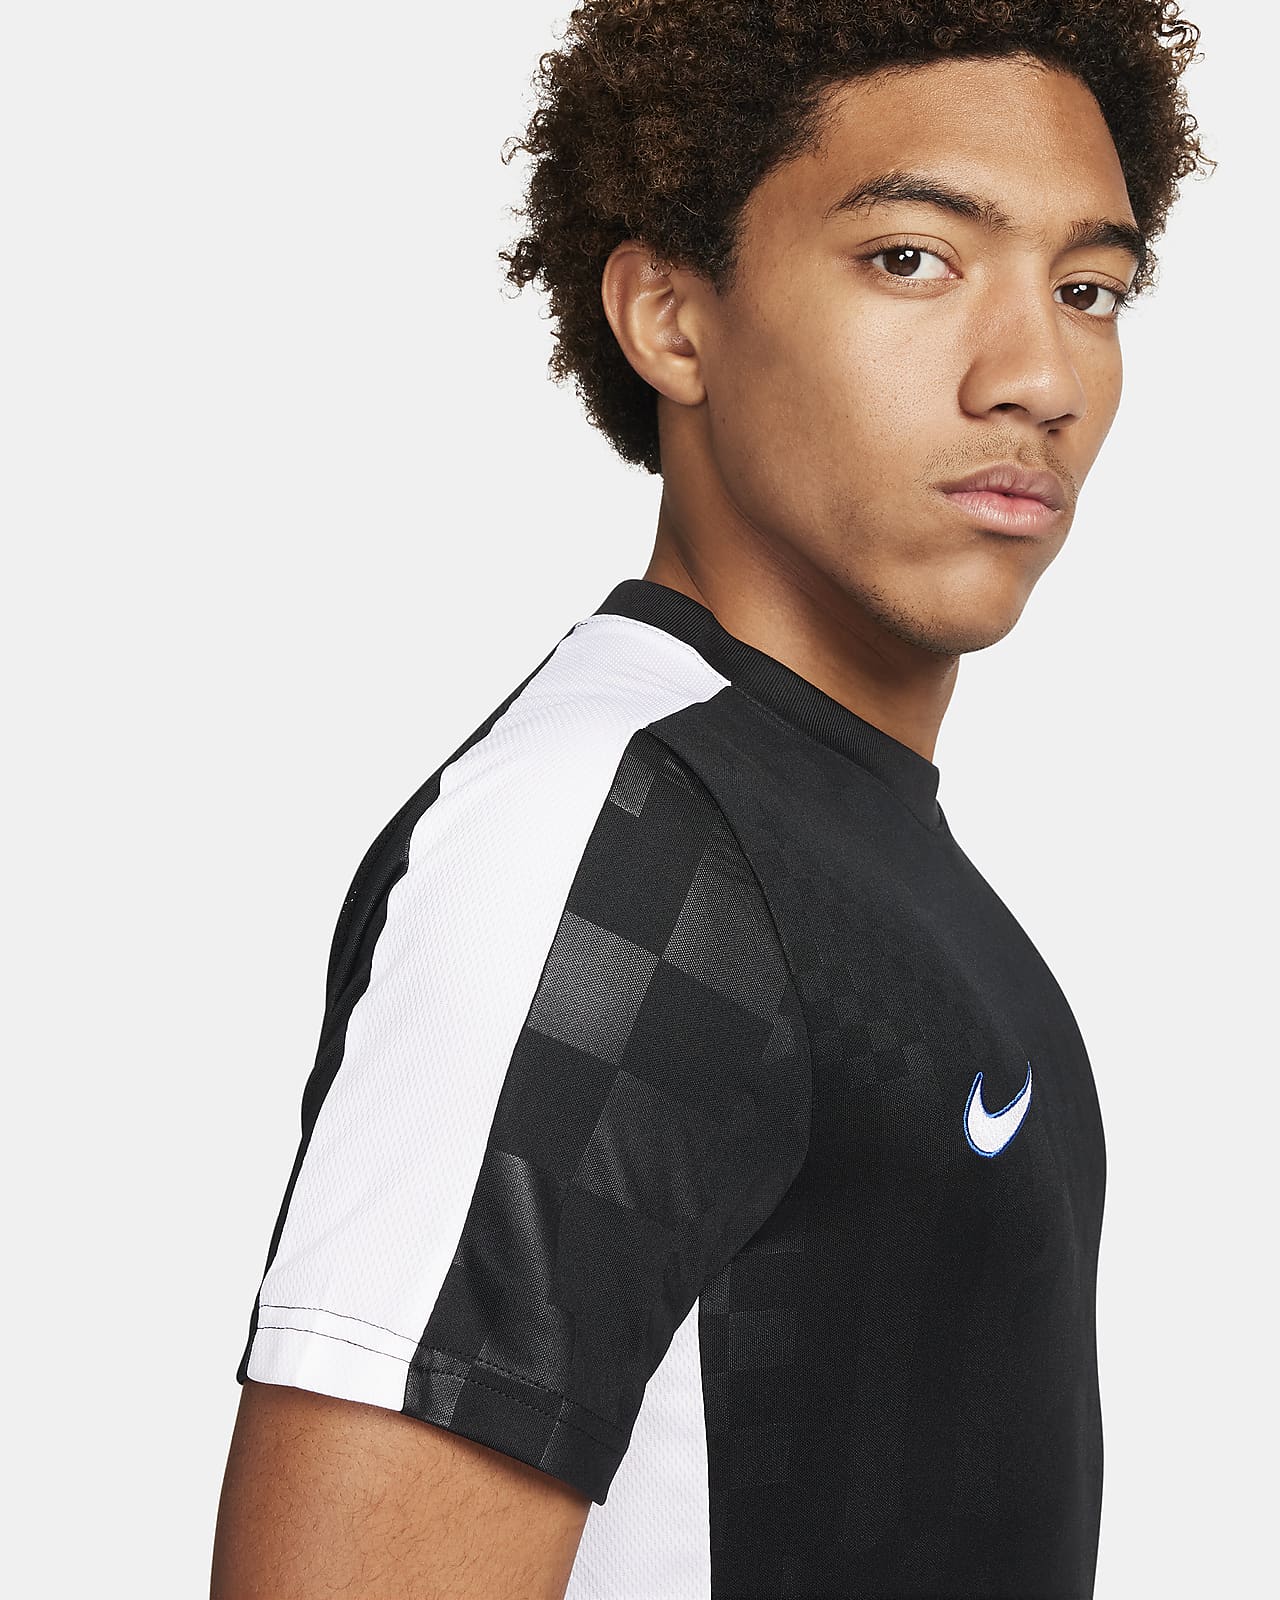 Soccer Top. Men\'s Short-Sleeve Dri-FIT Academy Nike